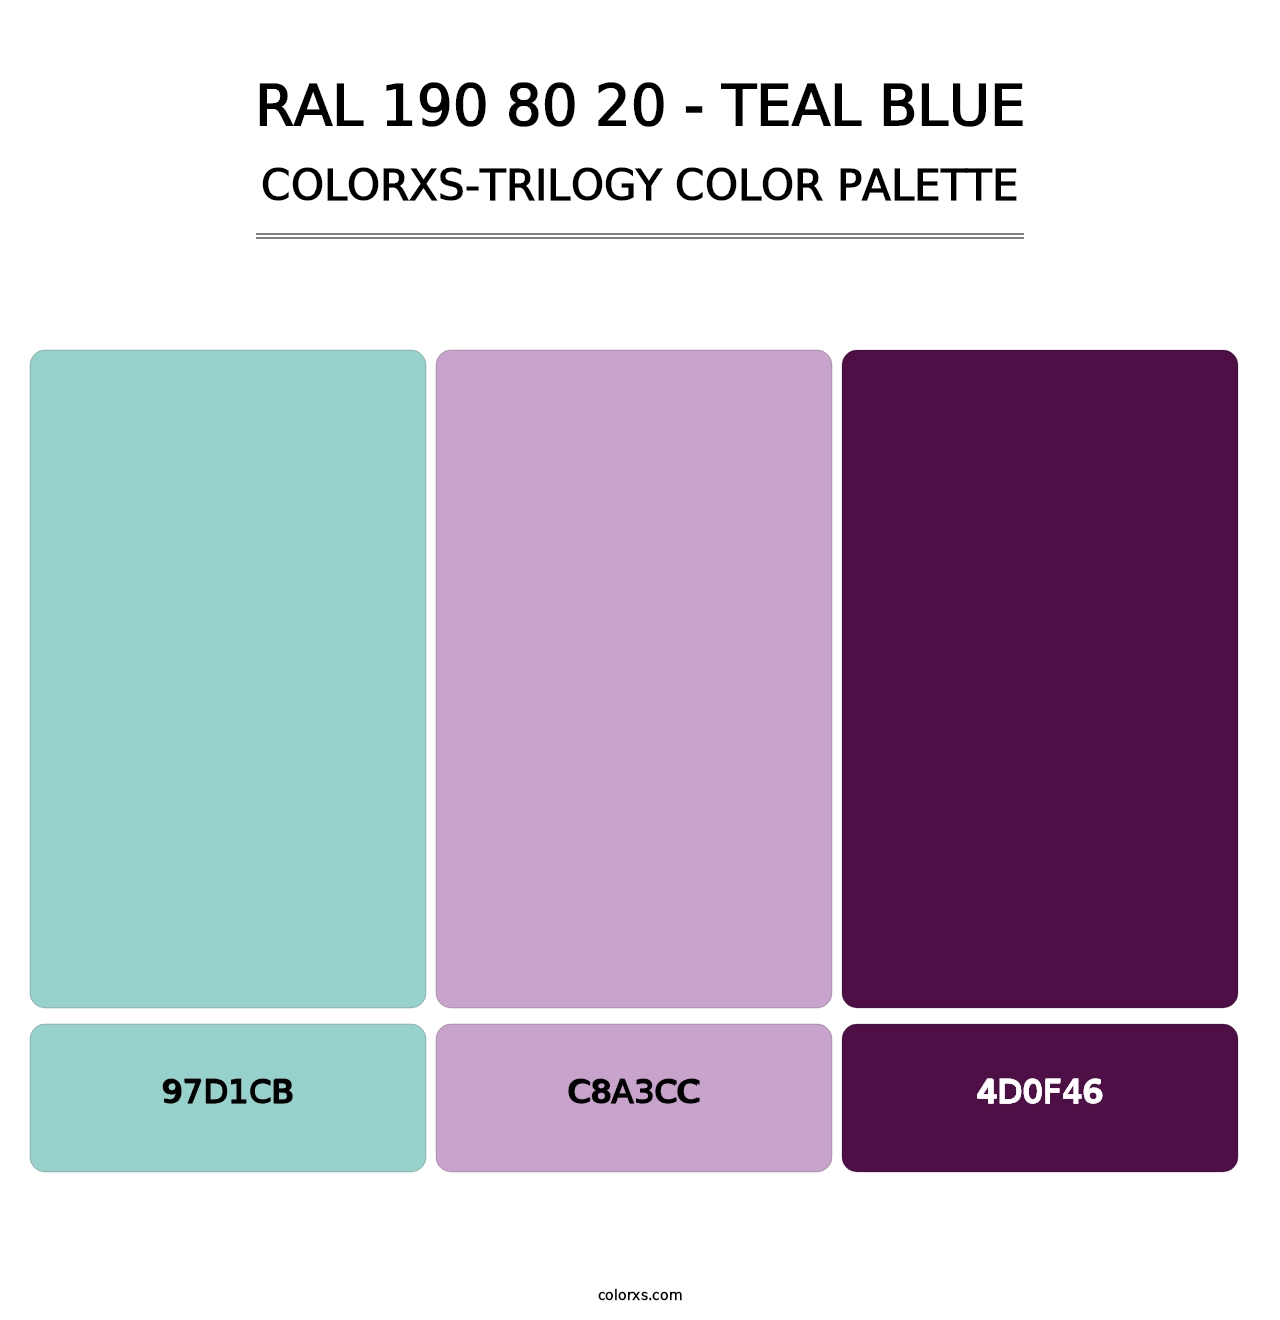 RAL 190 80 20 - Teal Blue - Colorxs Trilogy Palette